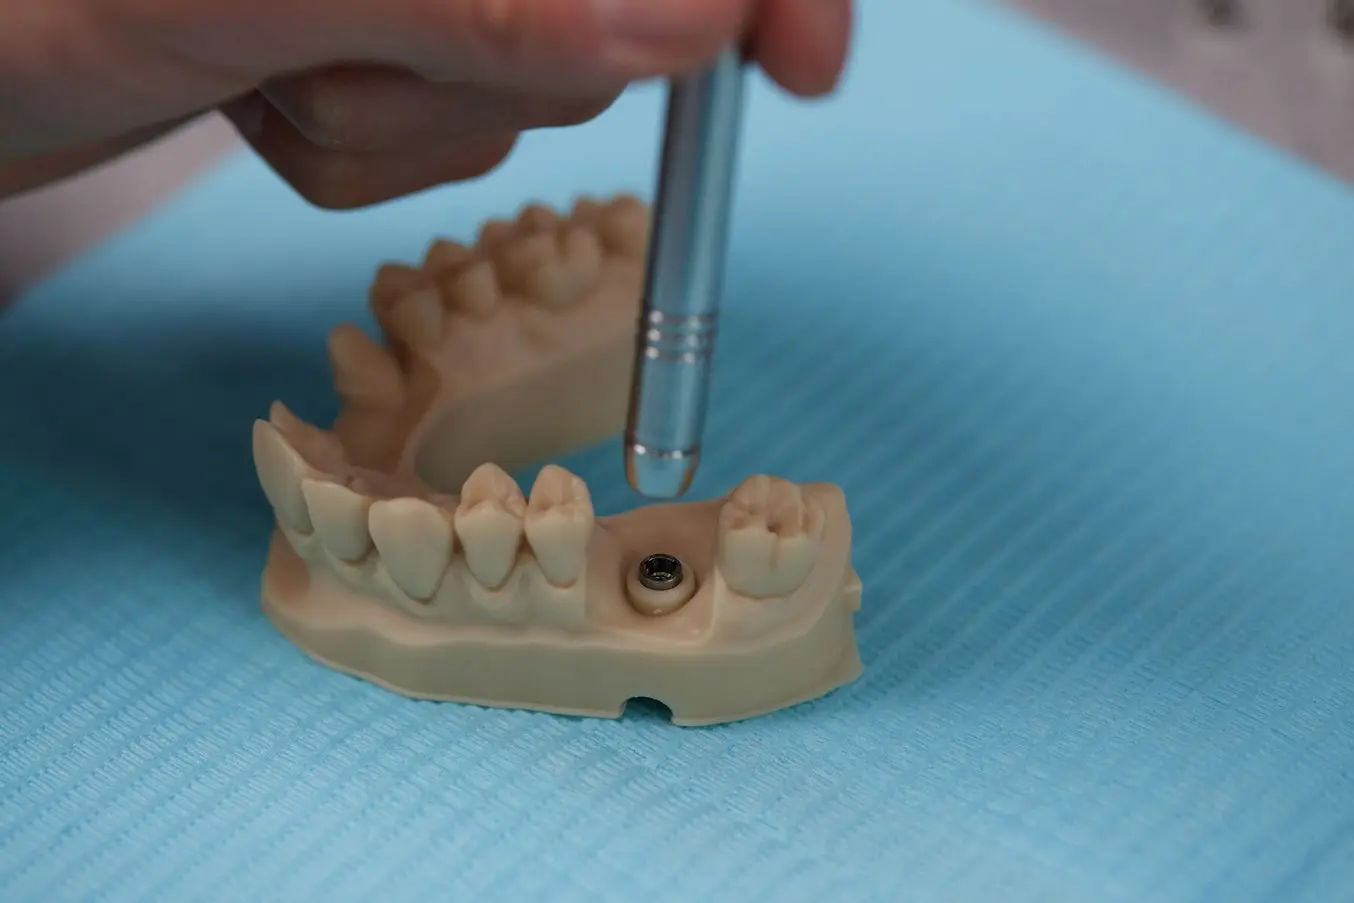 Formlabs Material Precision Model Resin for Dental Parts